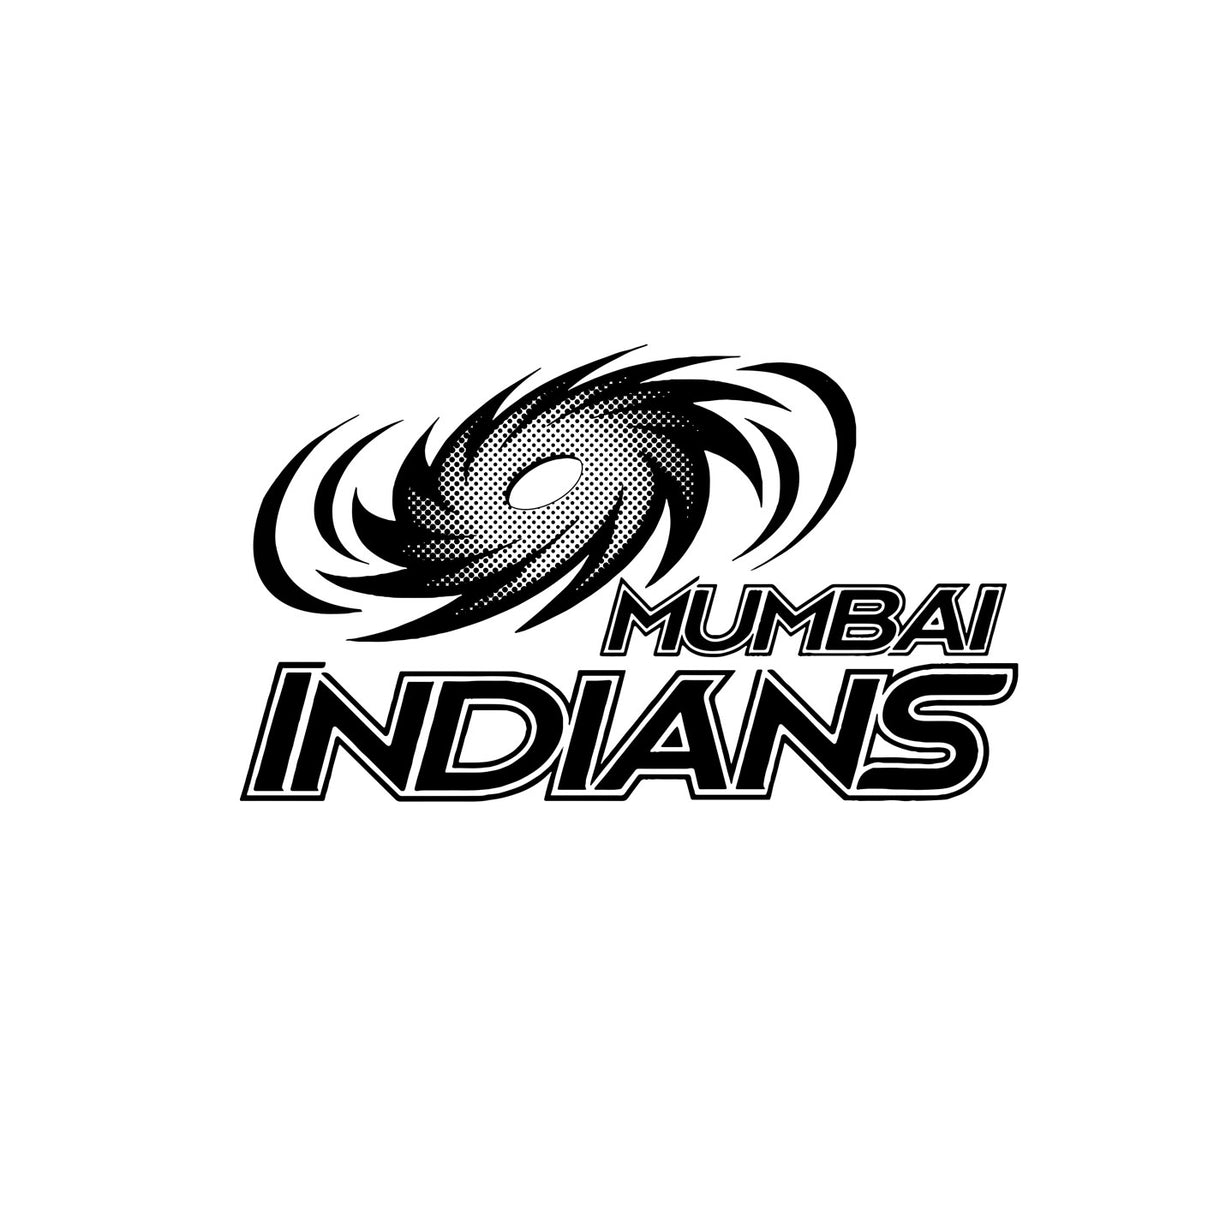 Mumbai Indians- IPL Semi Permanent Tattoo